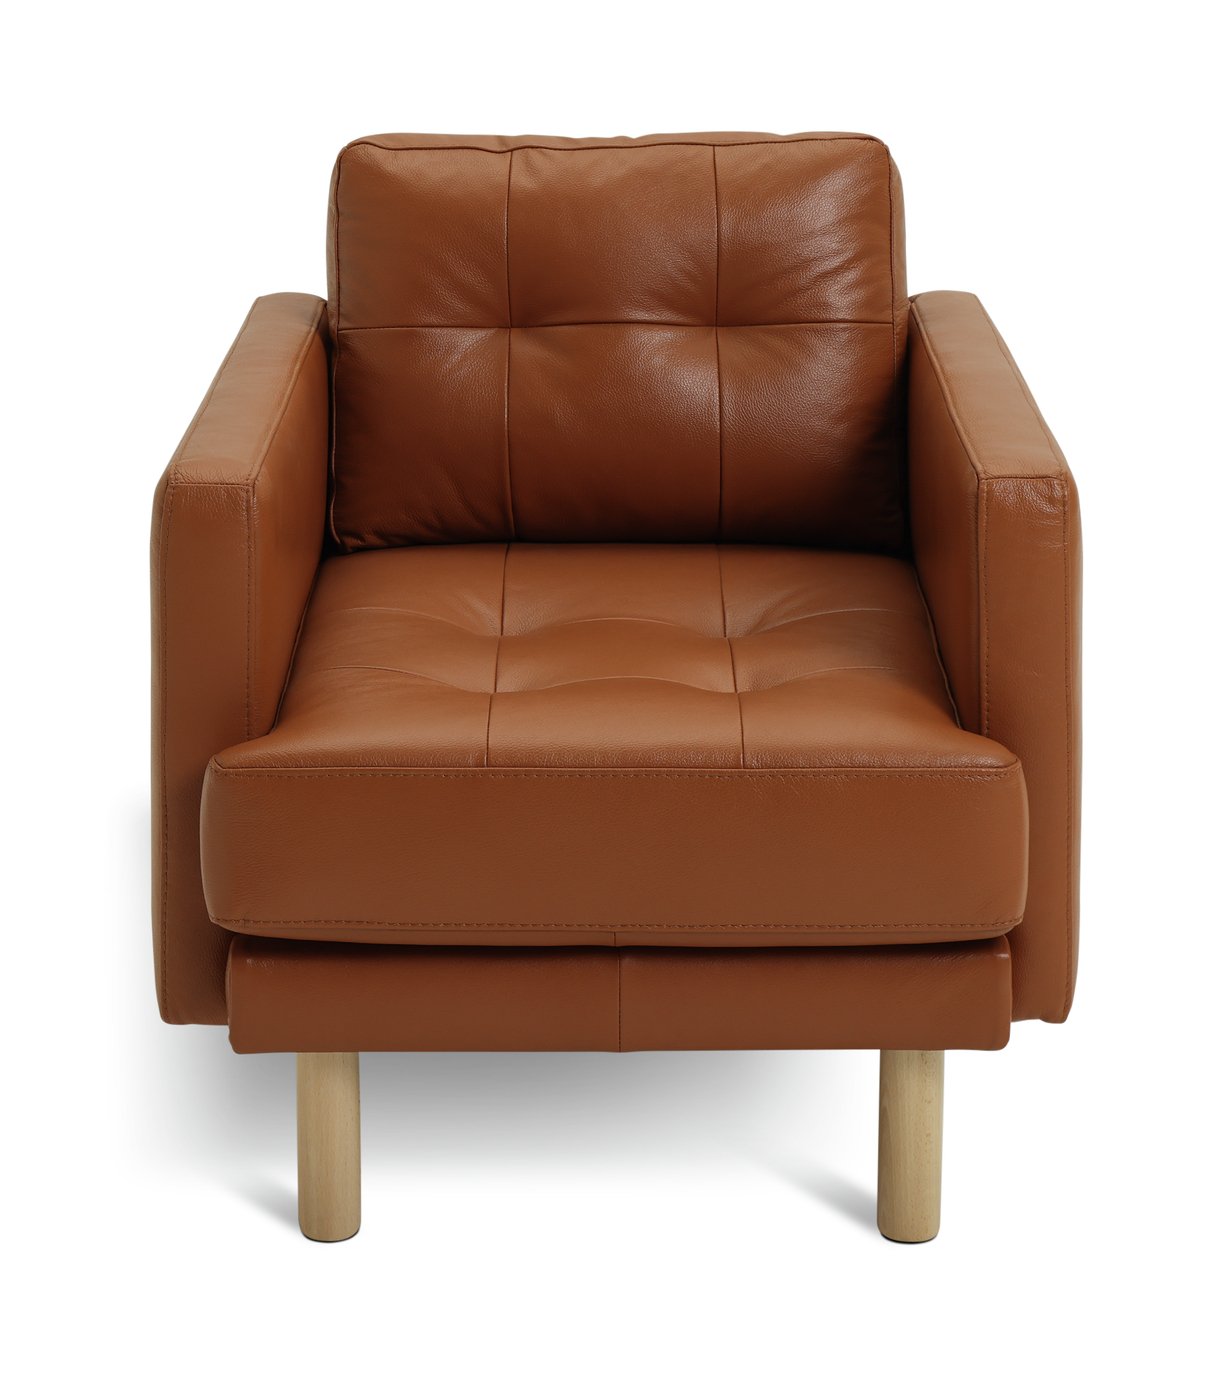 Habitat Newell Leather Armchair - Tan